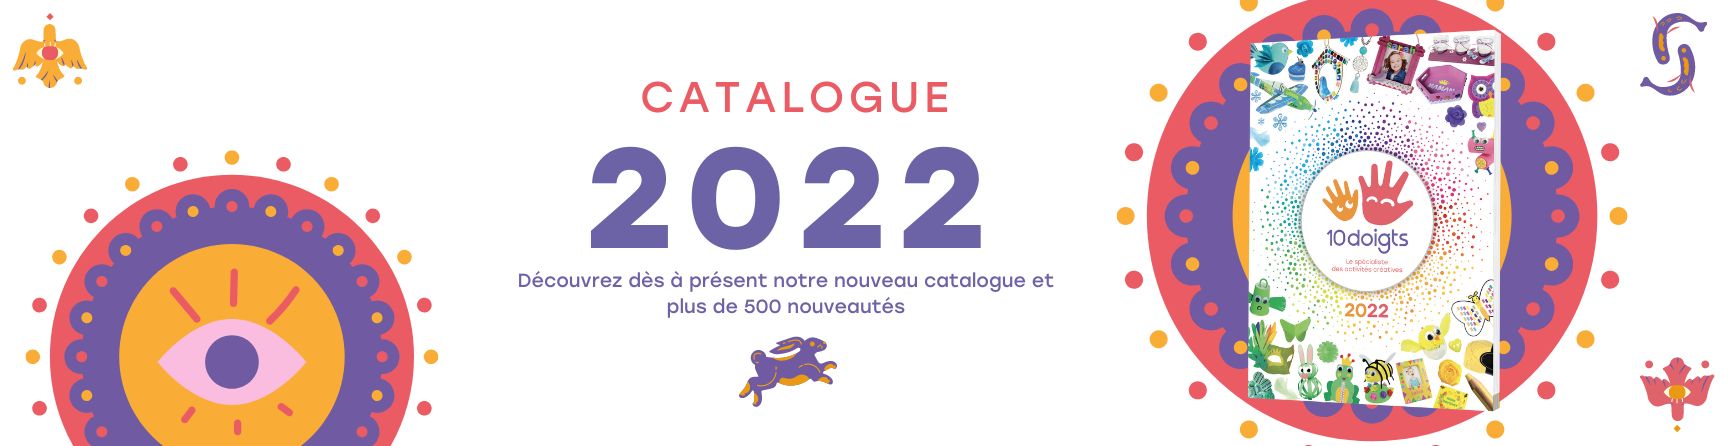 catalogue 2022 commande